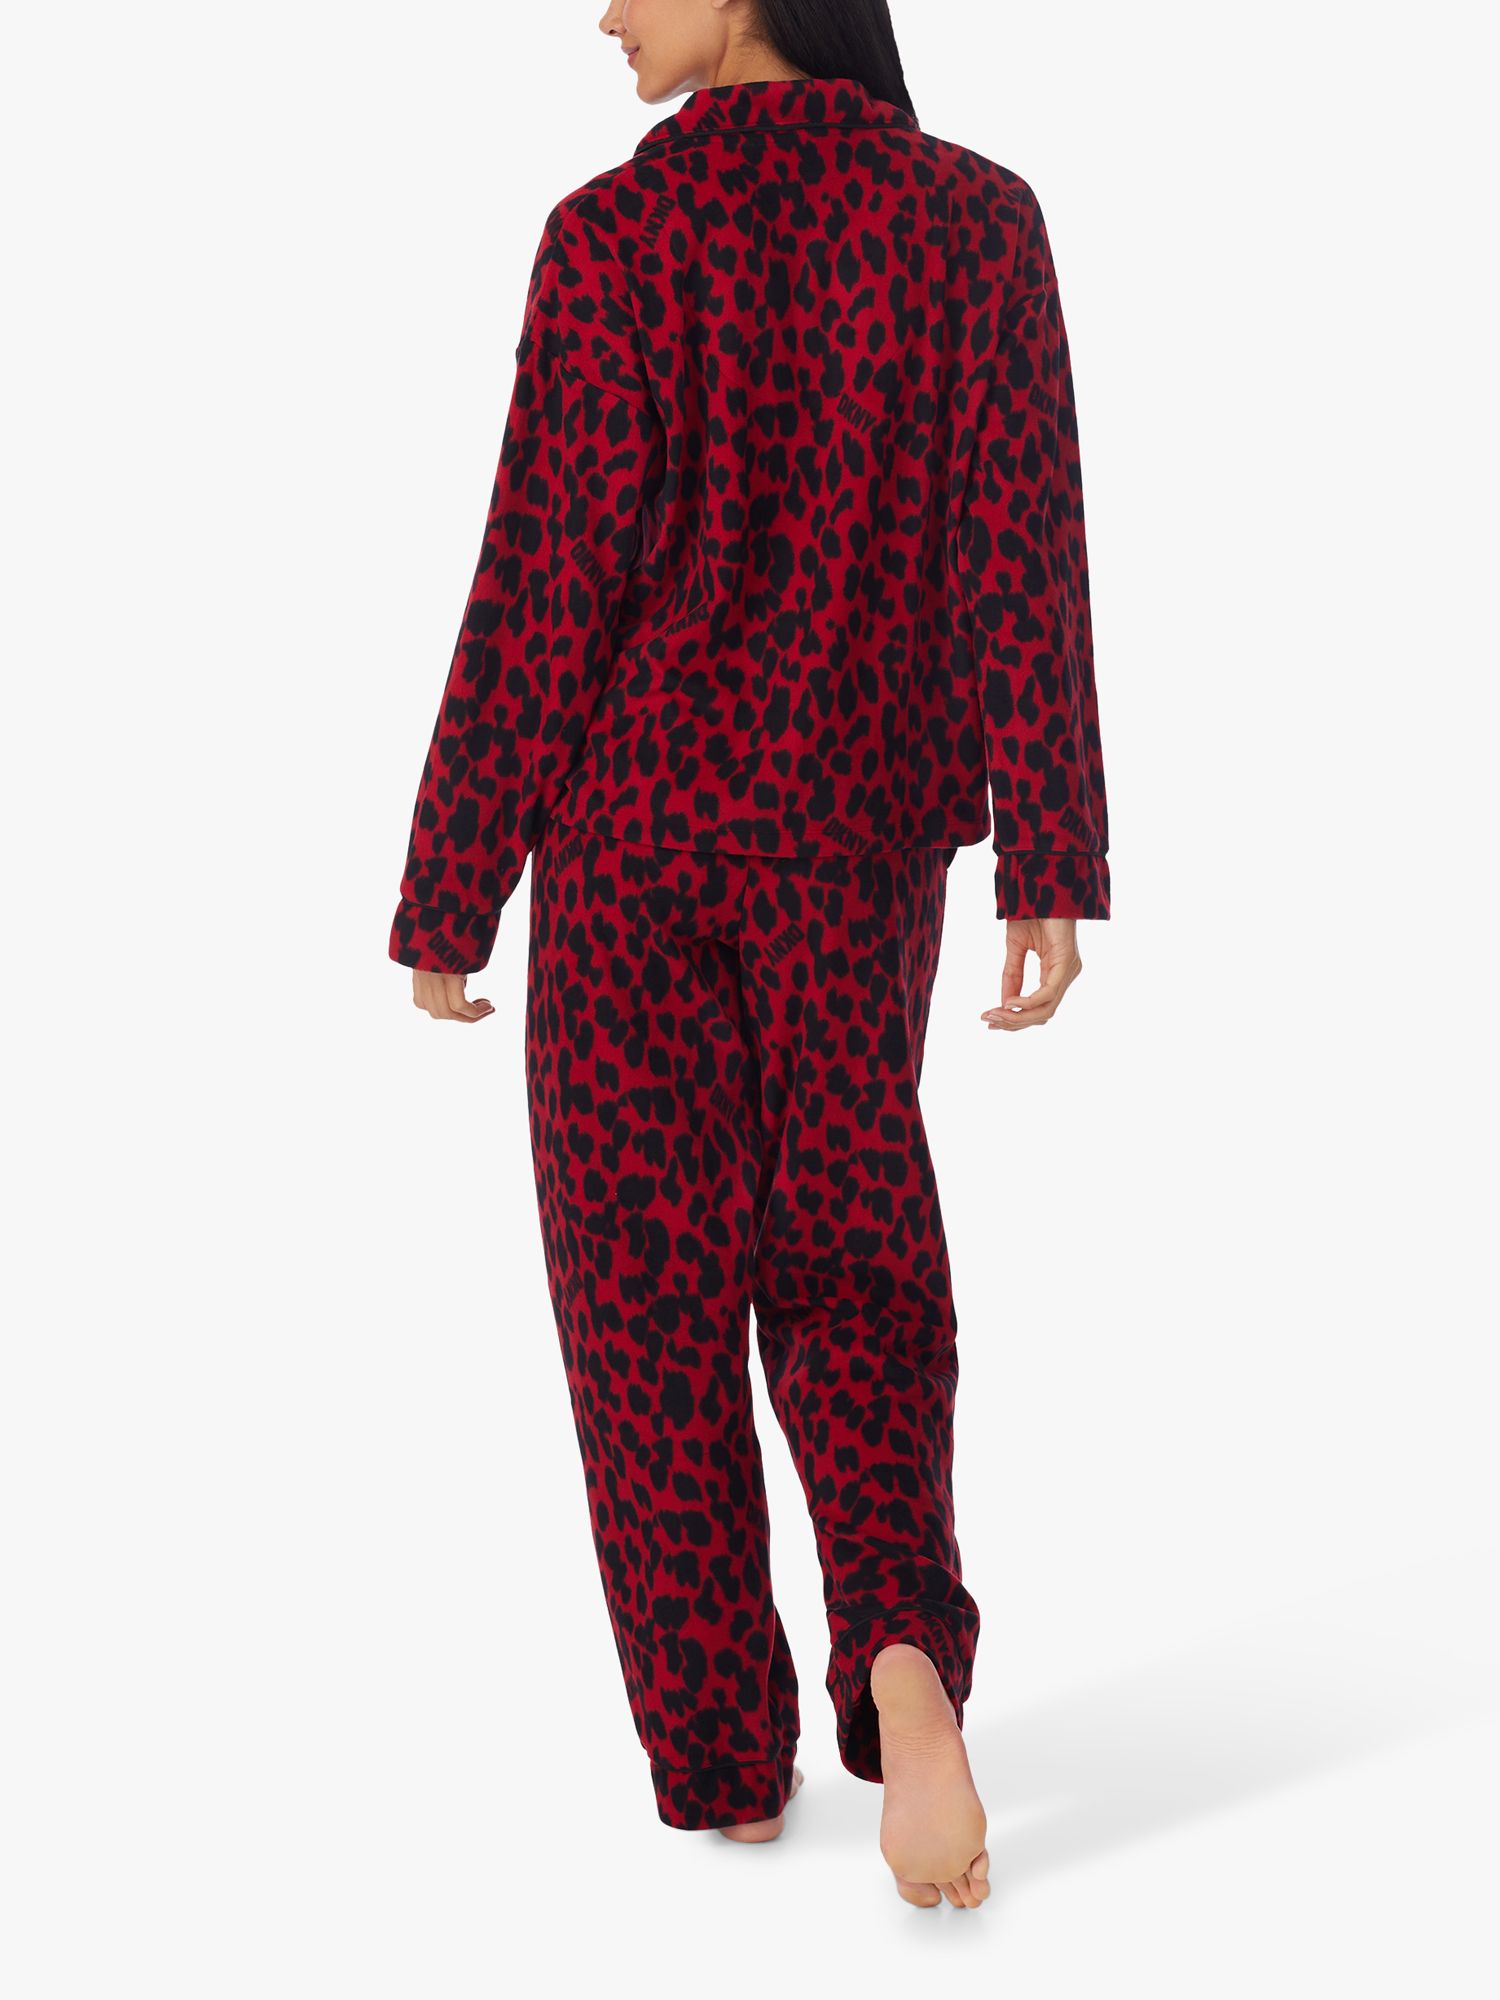 DKNY Stretch Fleece Long Sleeve Animal Print Pyjama Set, Red/Black at ...